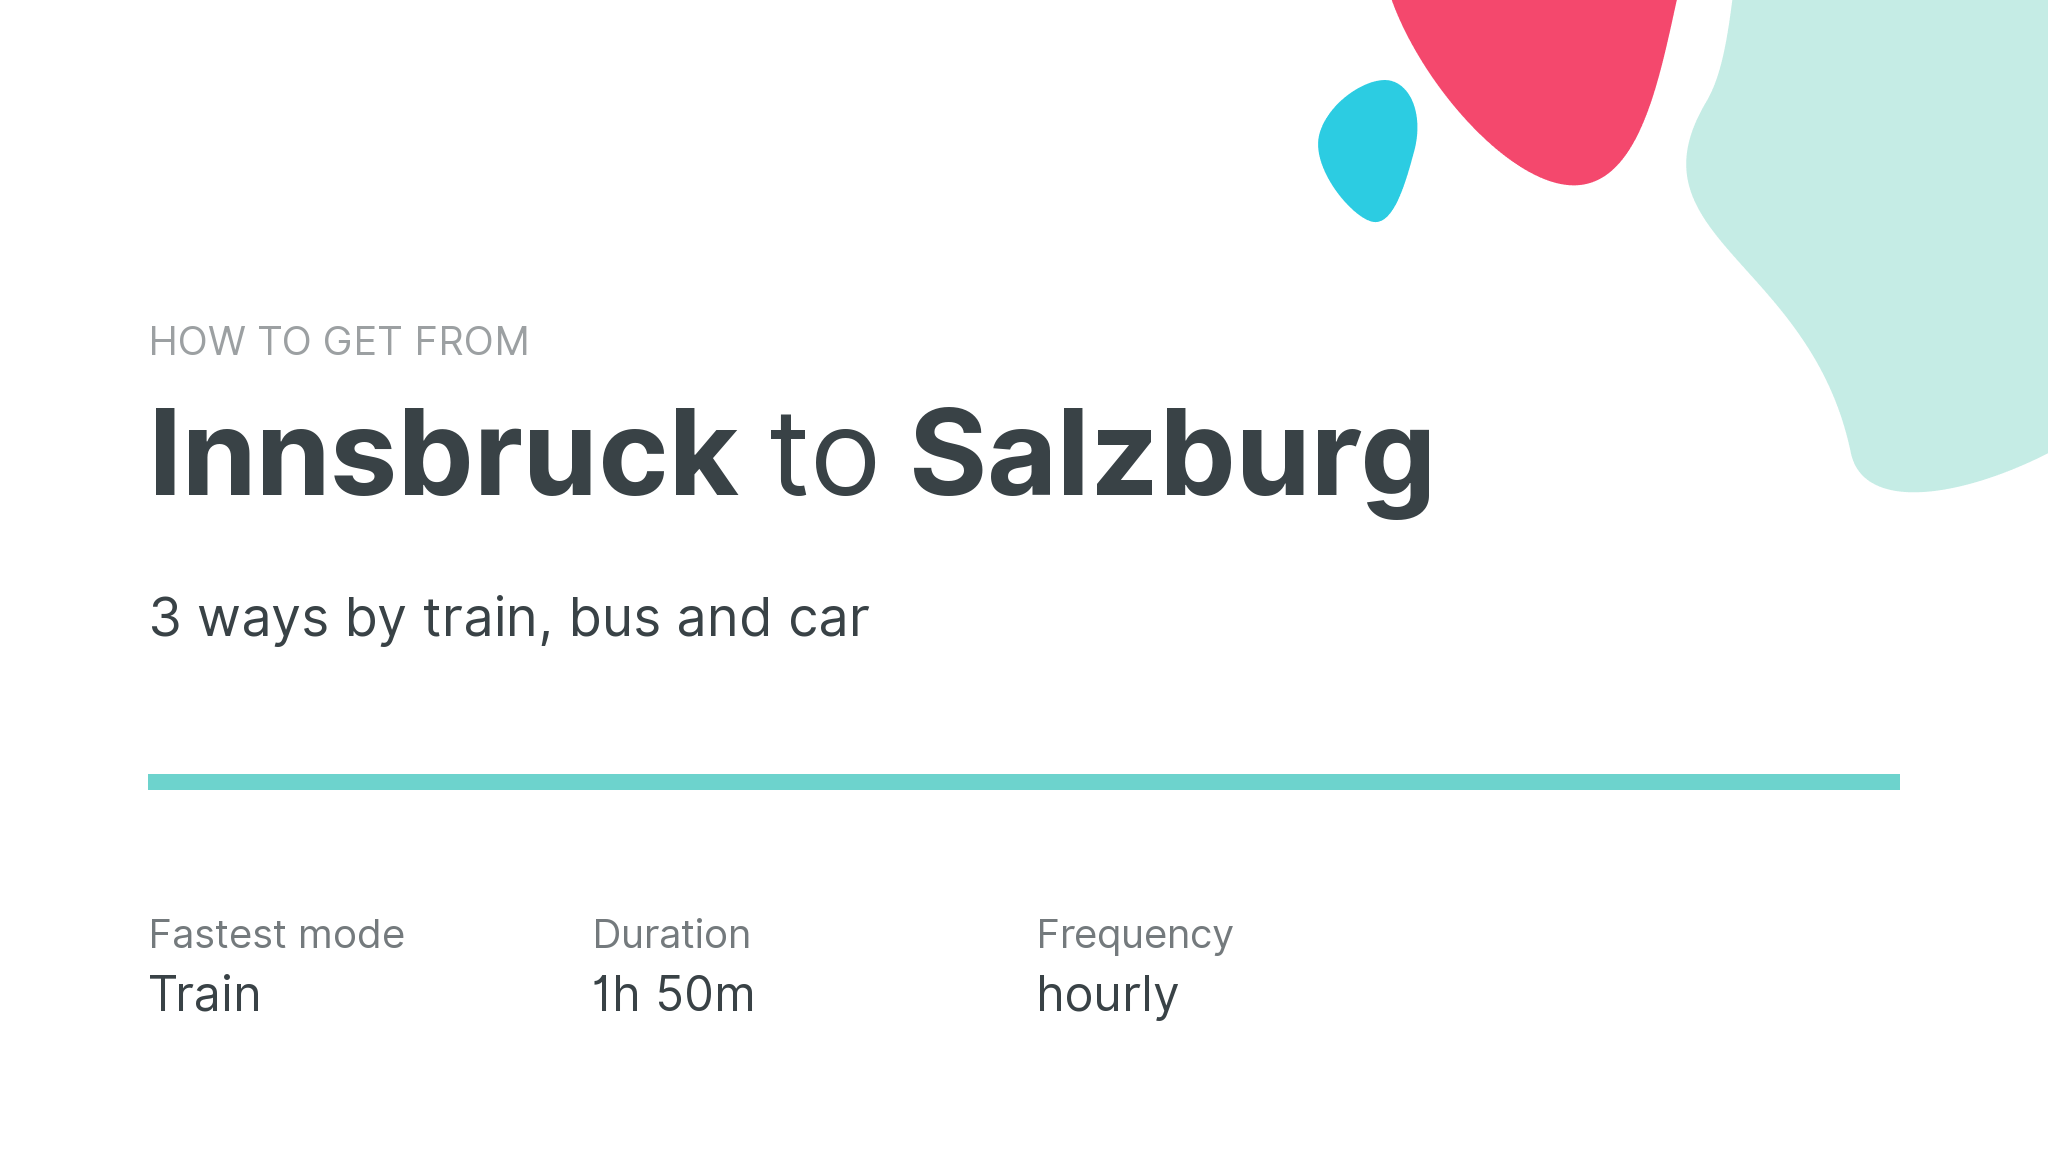 How do I get from Innsbruck to Salzburg